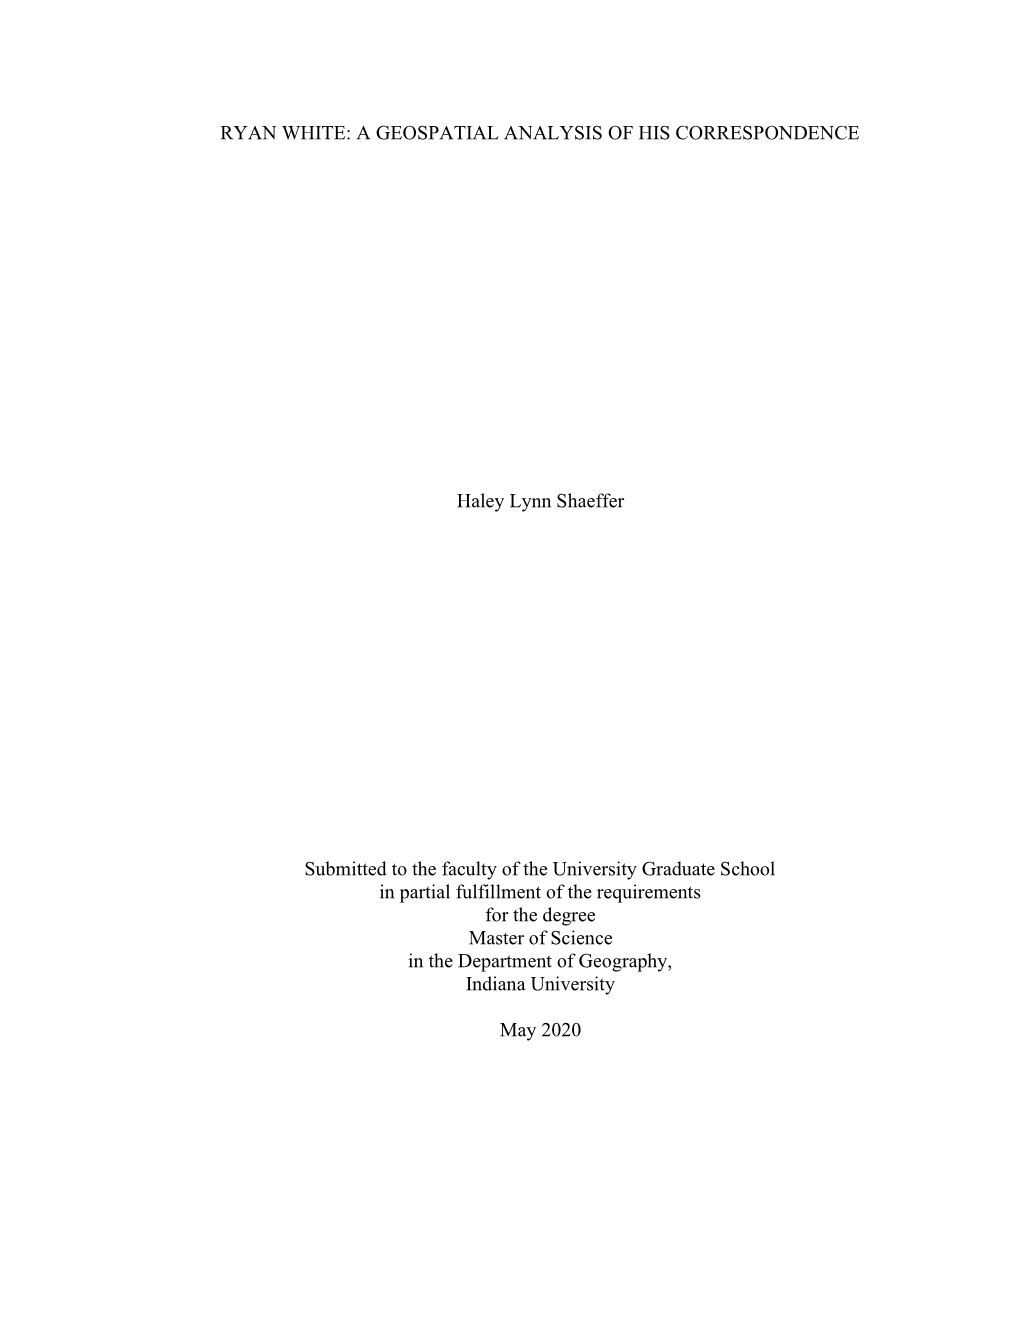 Ryan White: a Geospatial Analysis of His Correspondence